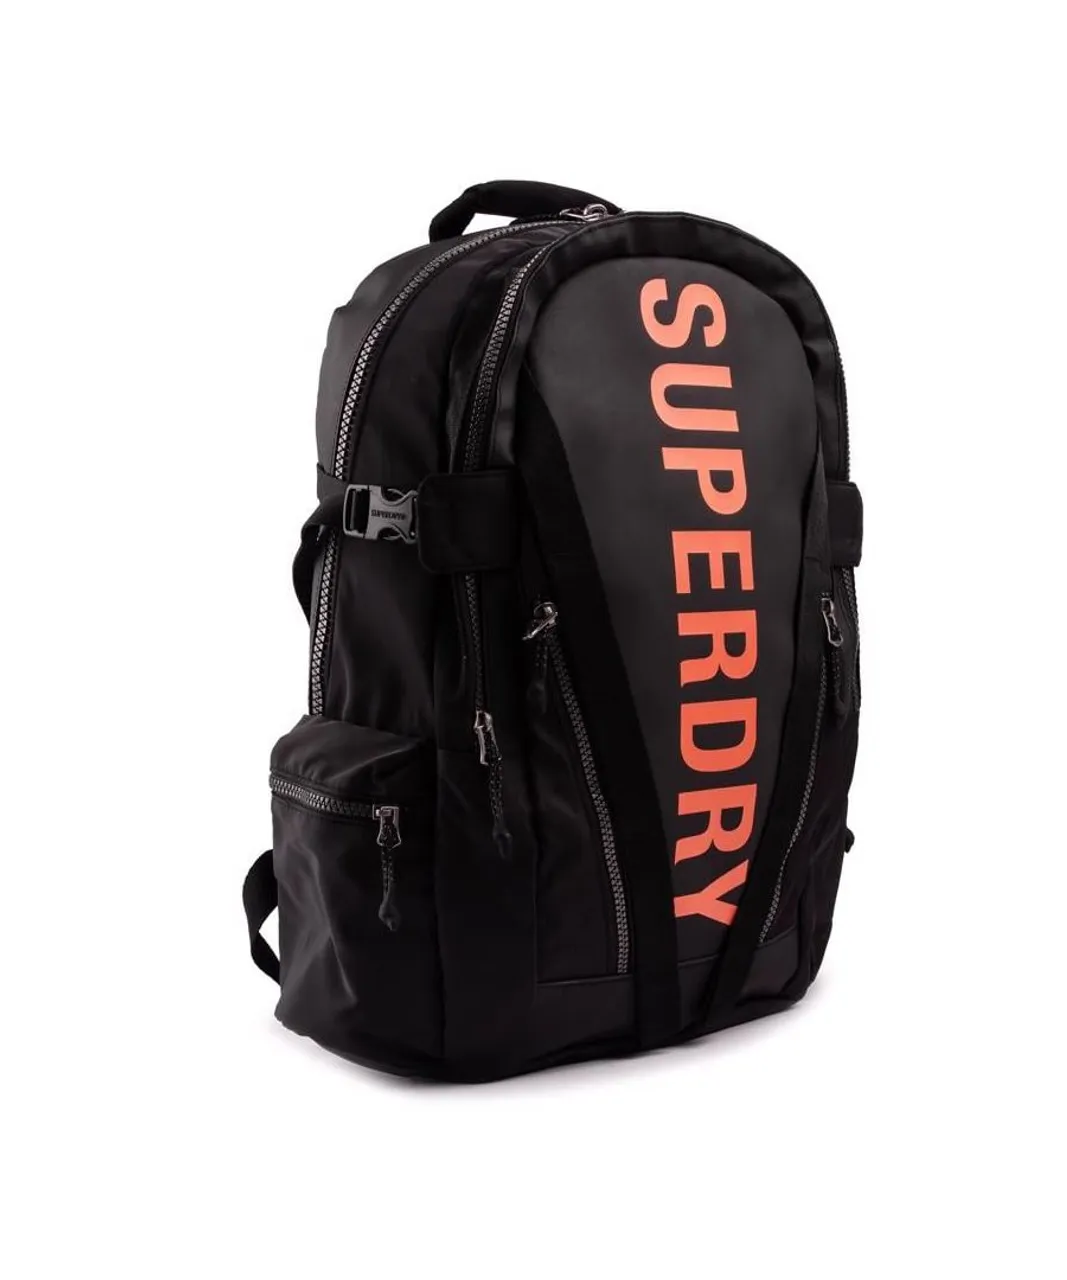 Superdry Mens Tarp Backpack - Black - One Size